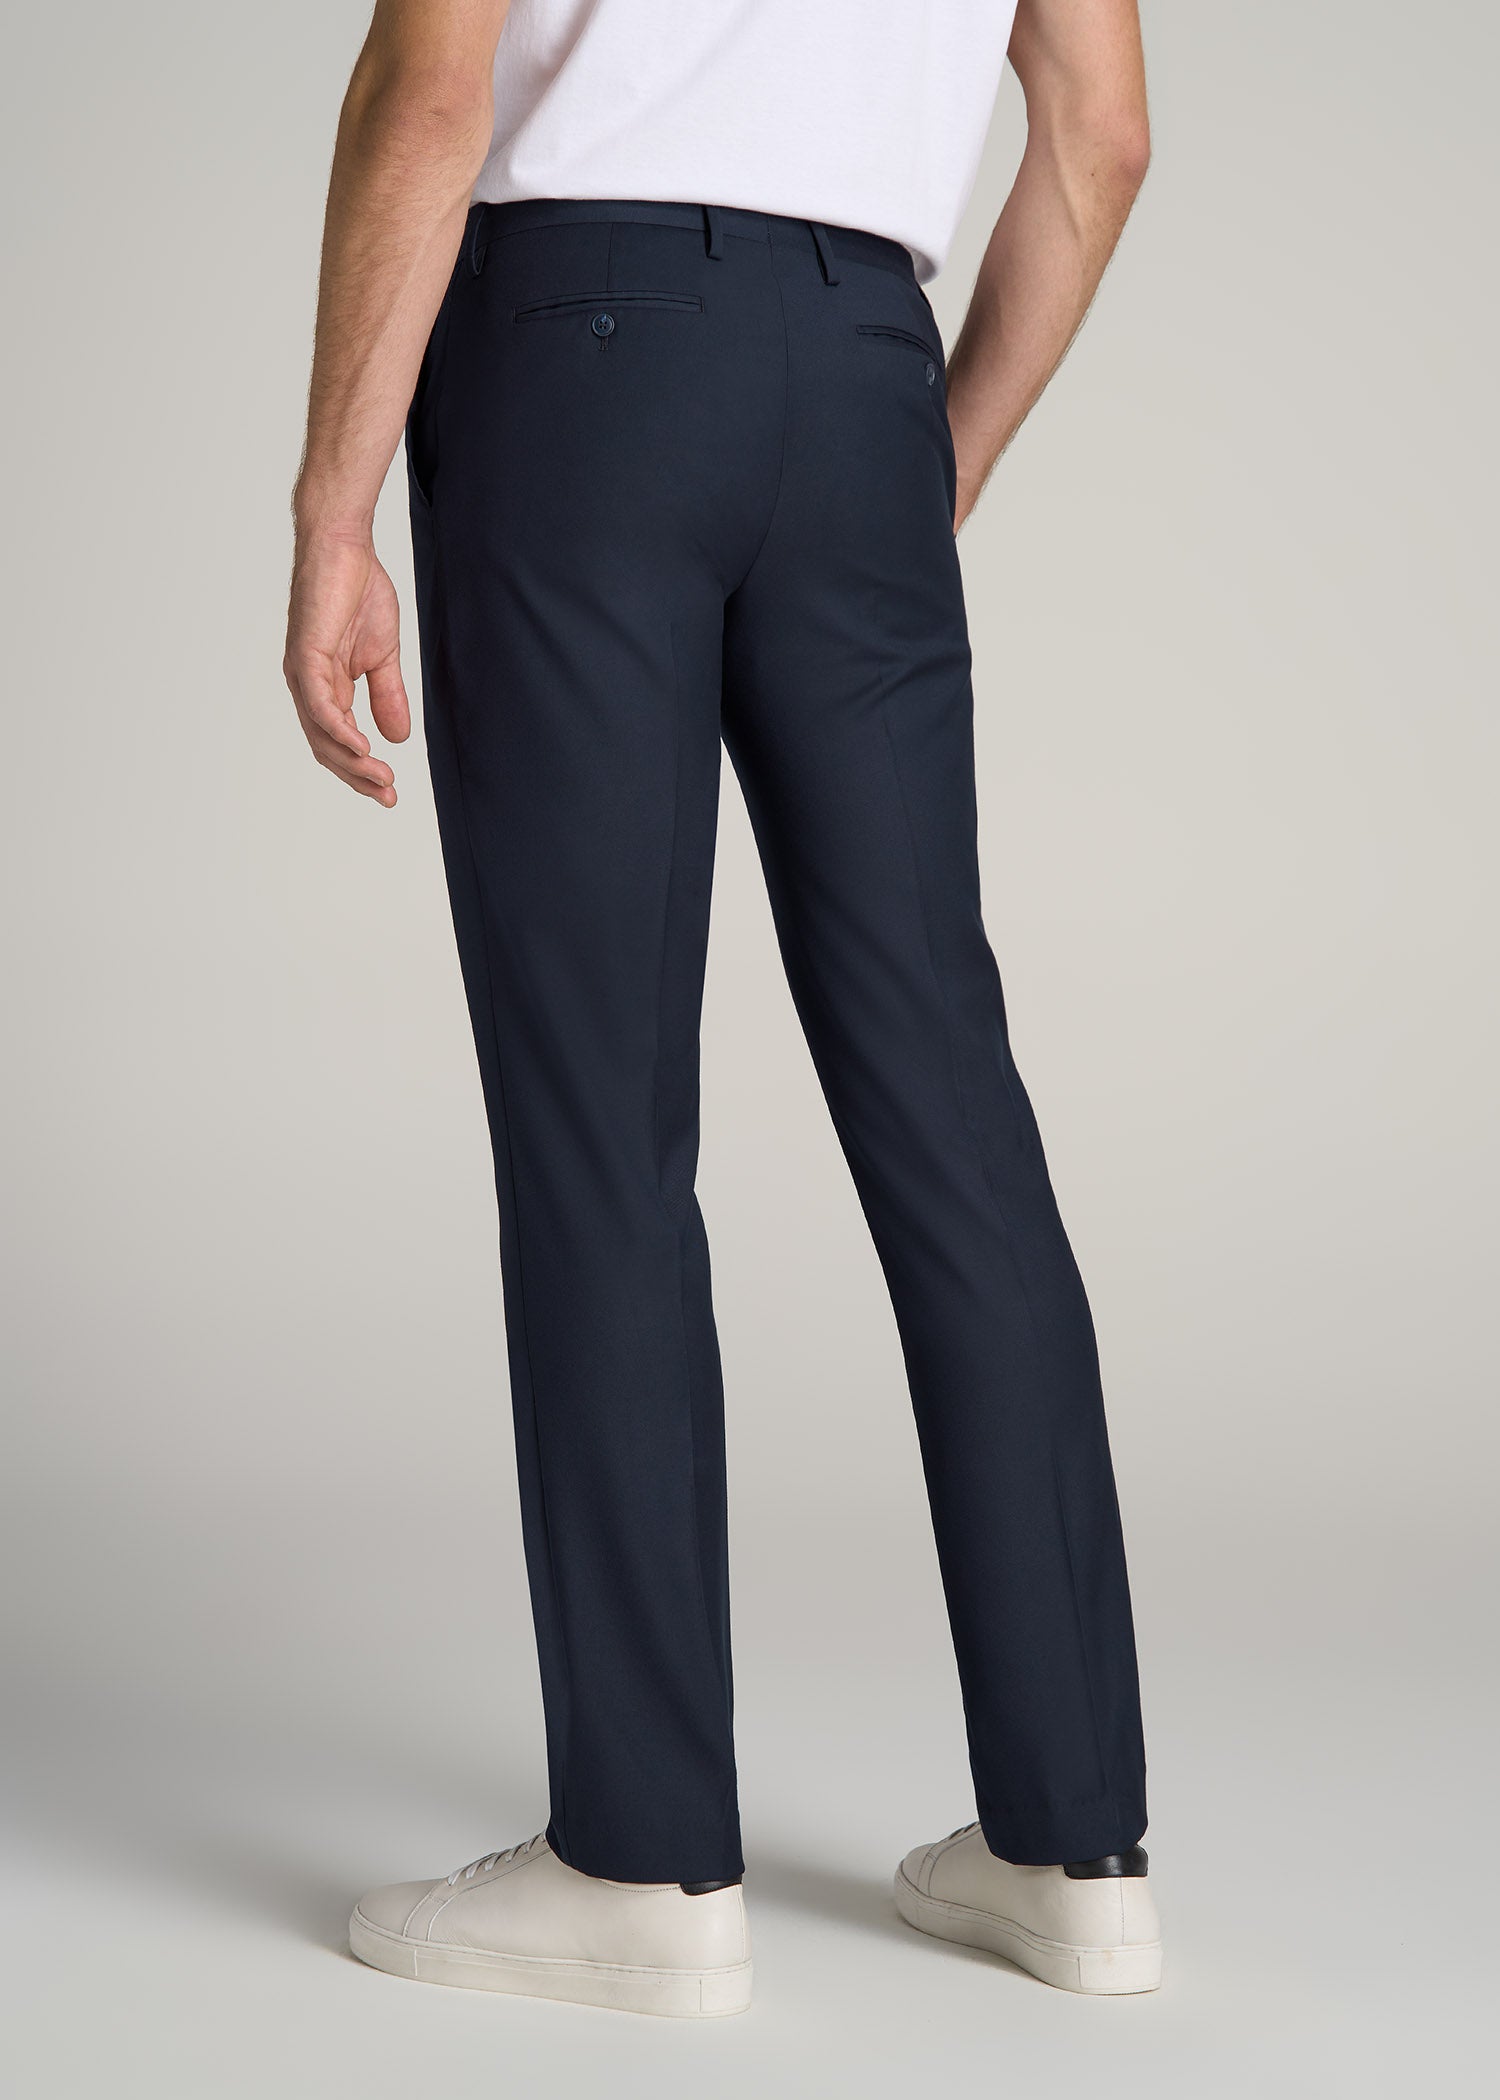 Men's Suit Separates Pleated Pant Classic Cut - MED GREY - 98/2 WOOL/L –  Hardwick.com